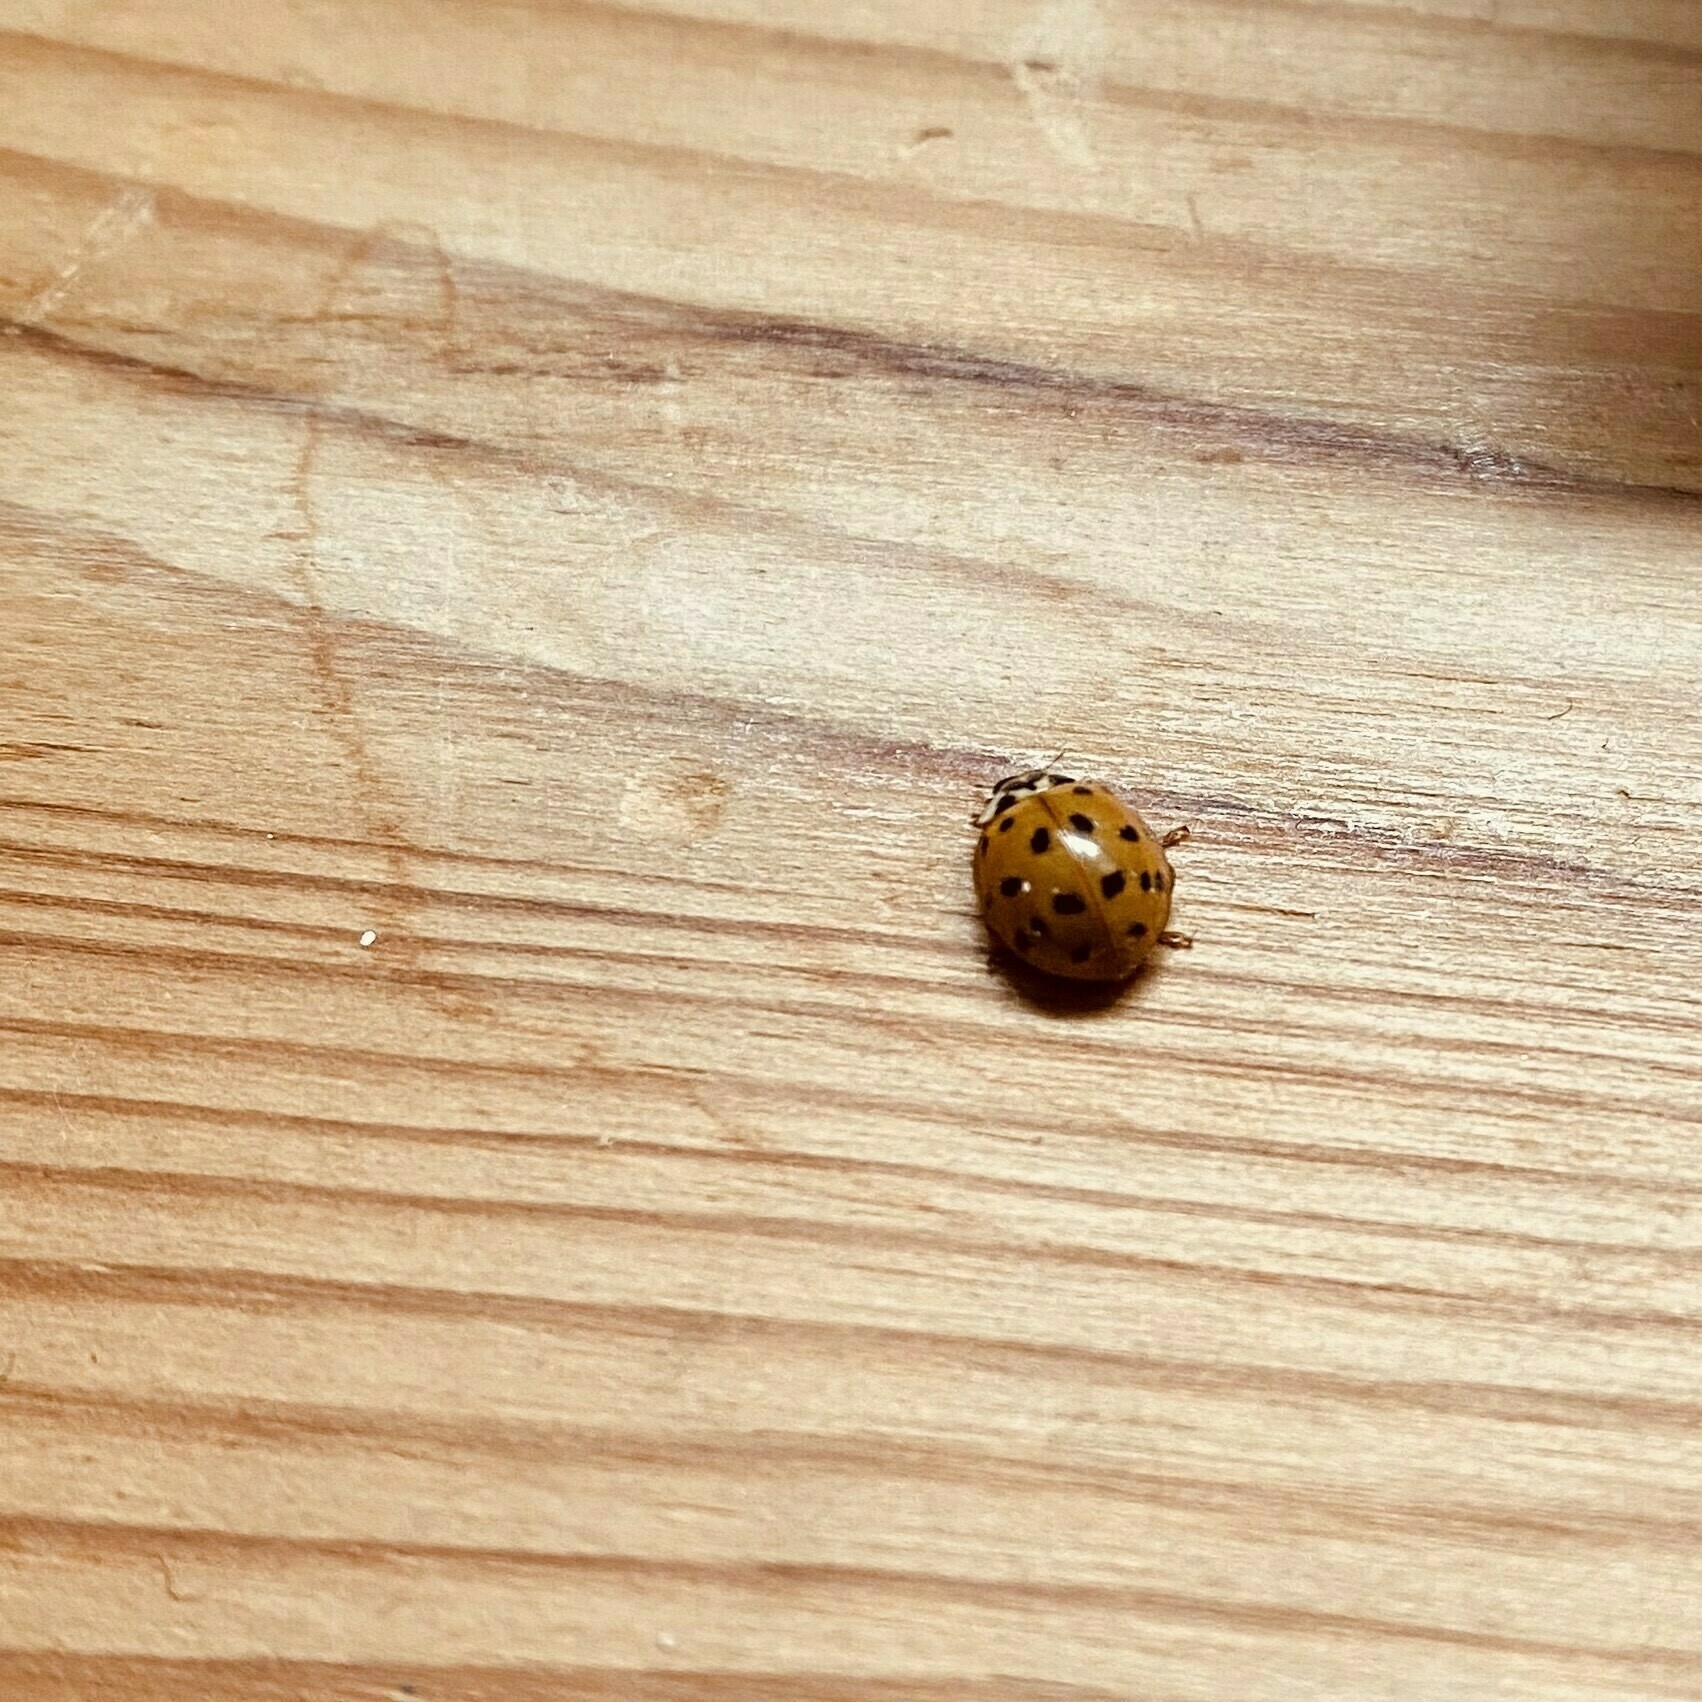 a ladybird on my wooden desk